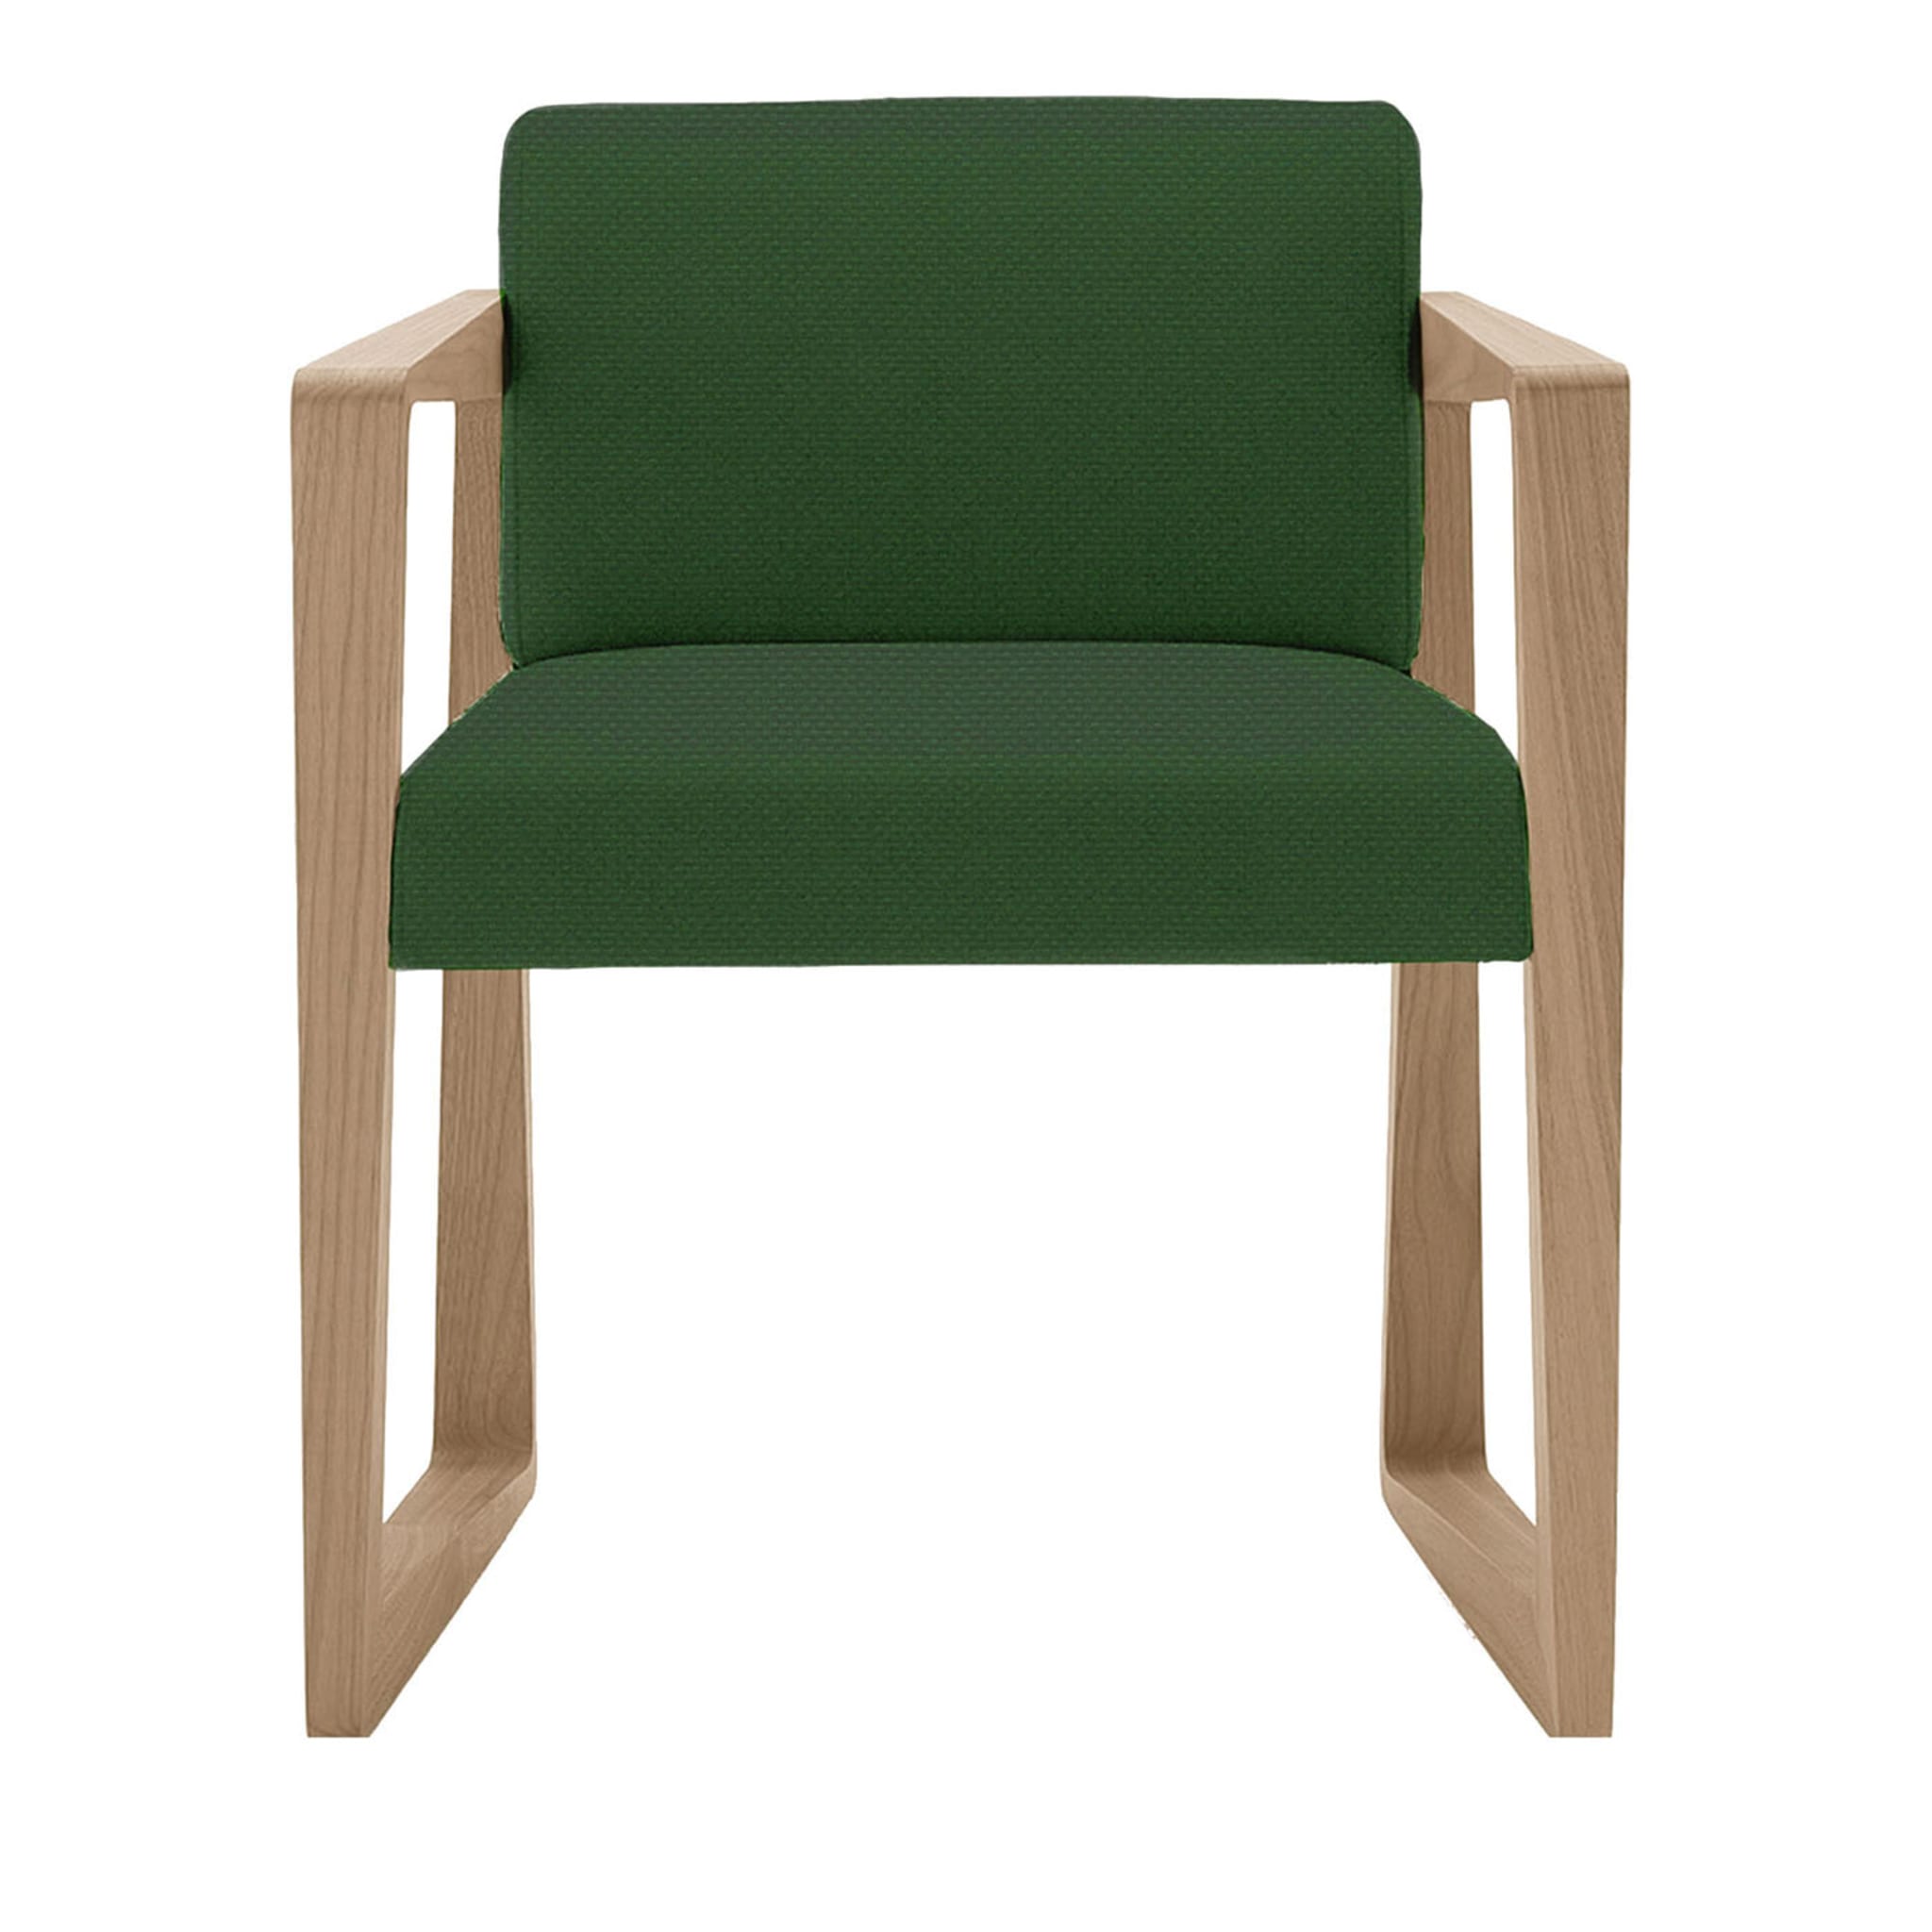 Askew Small Green Armchair by Daniel Fintzi - Main view